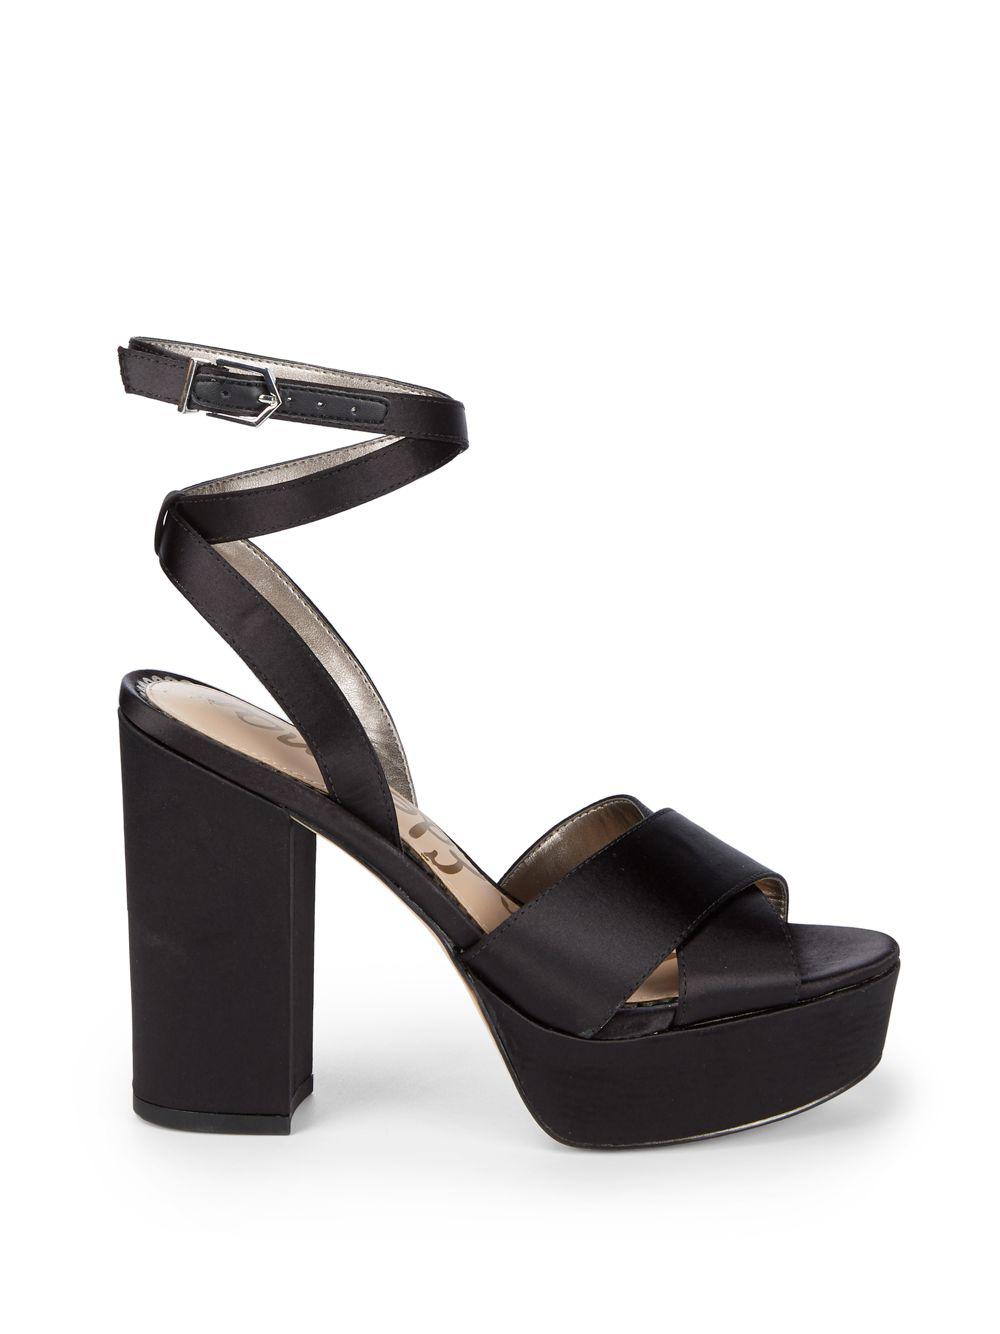 Sam Edelman Synthetic Masie Platform Sandals in Black - Lyst